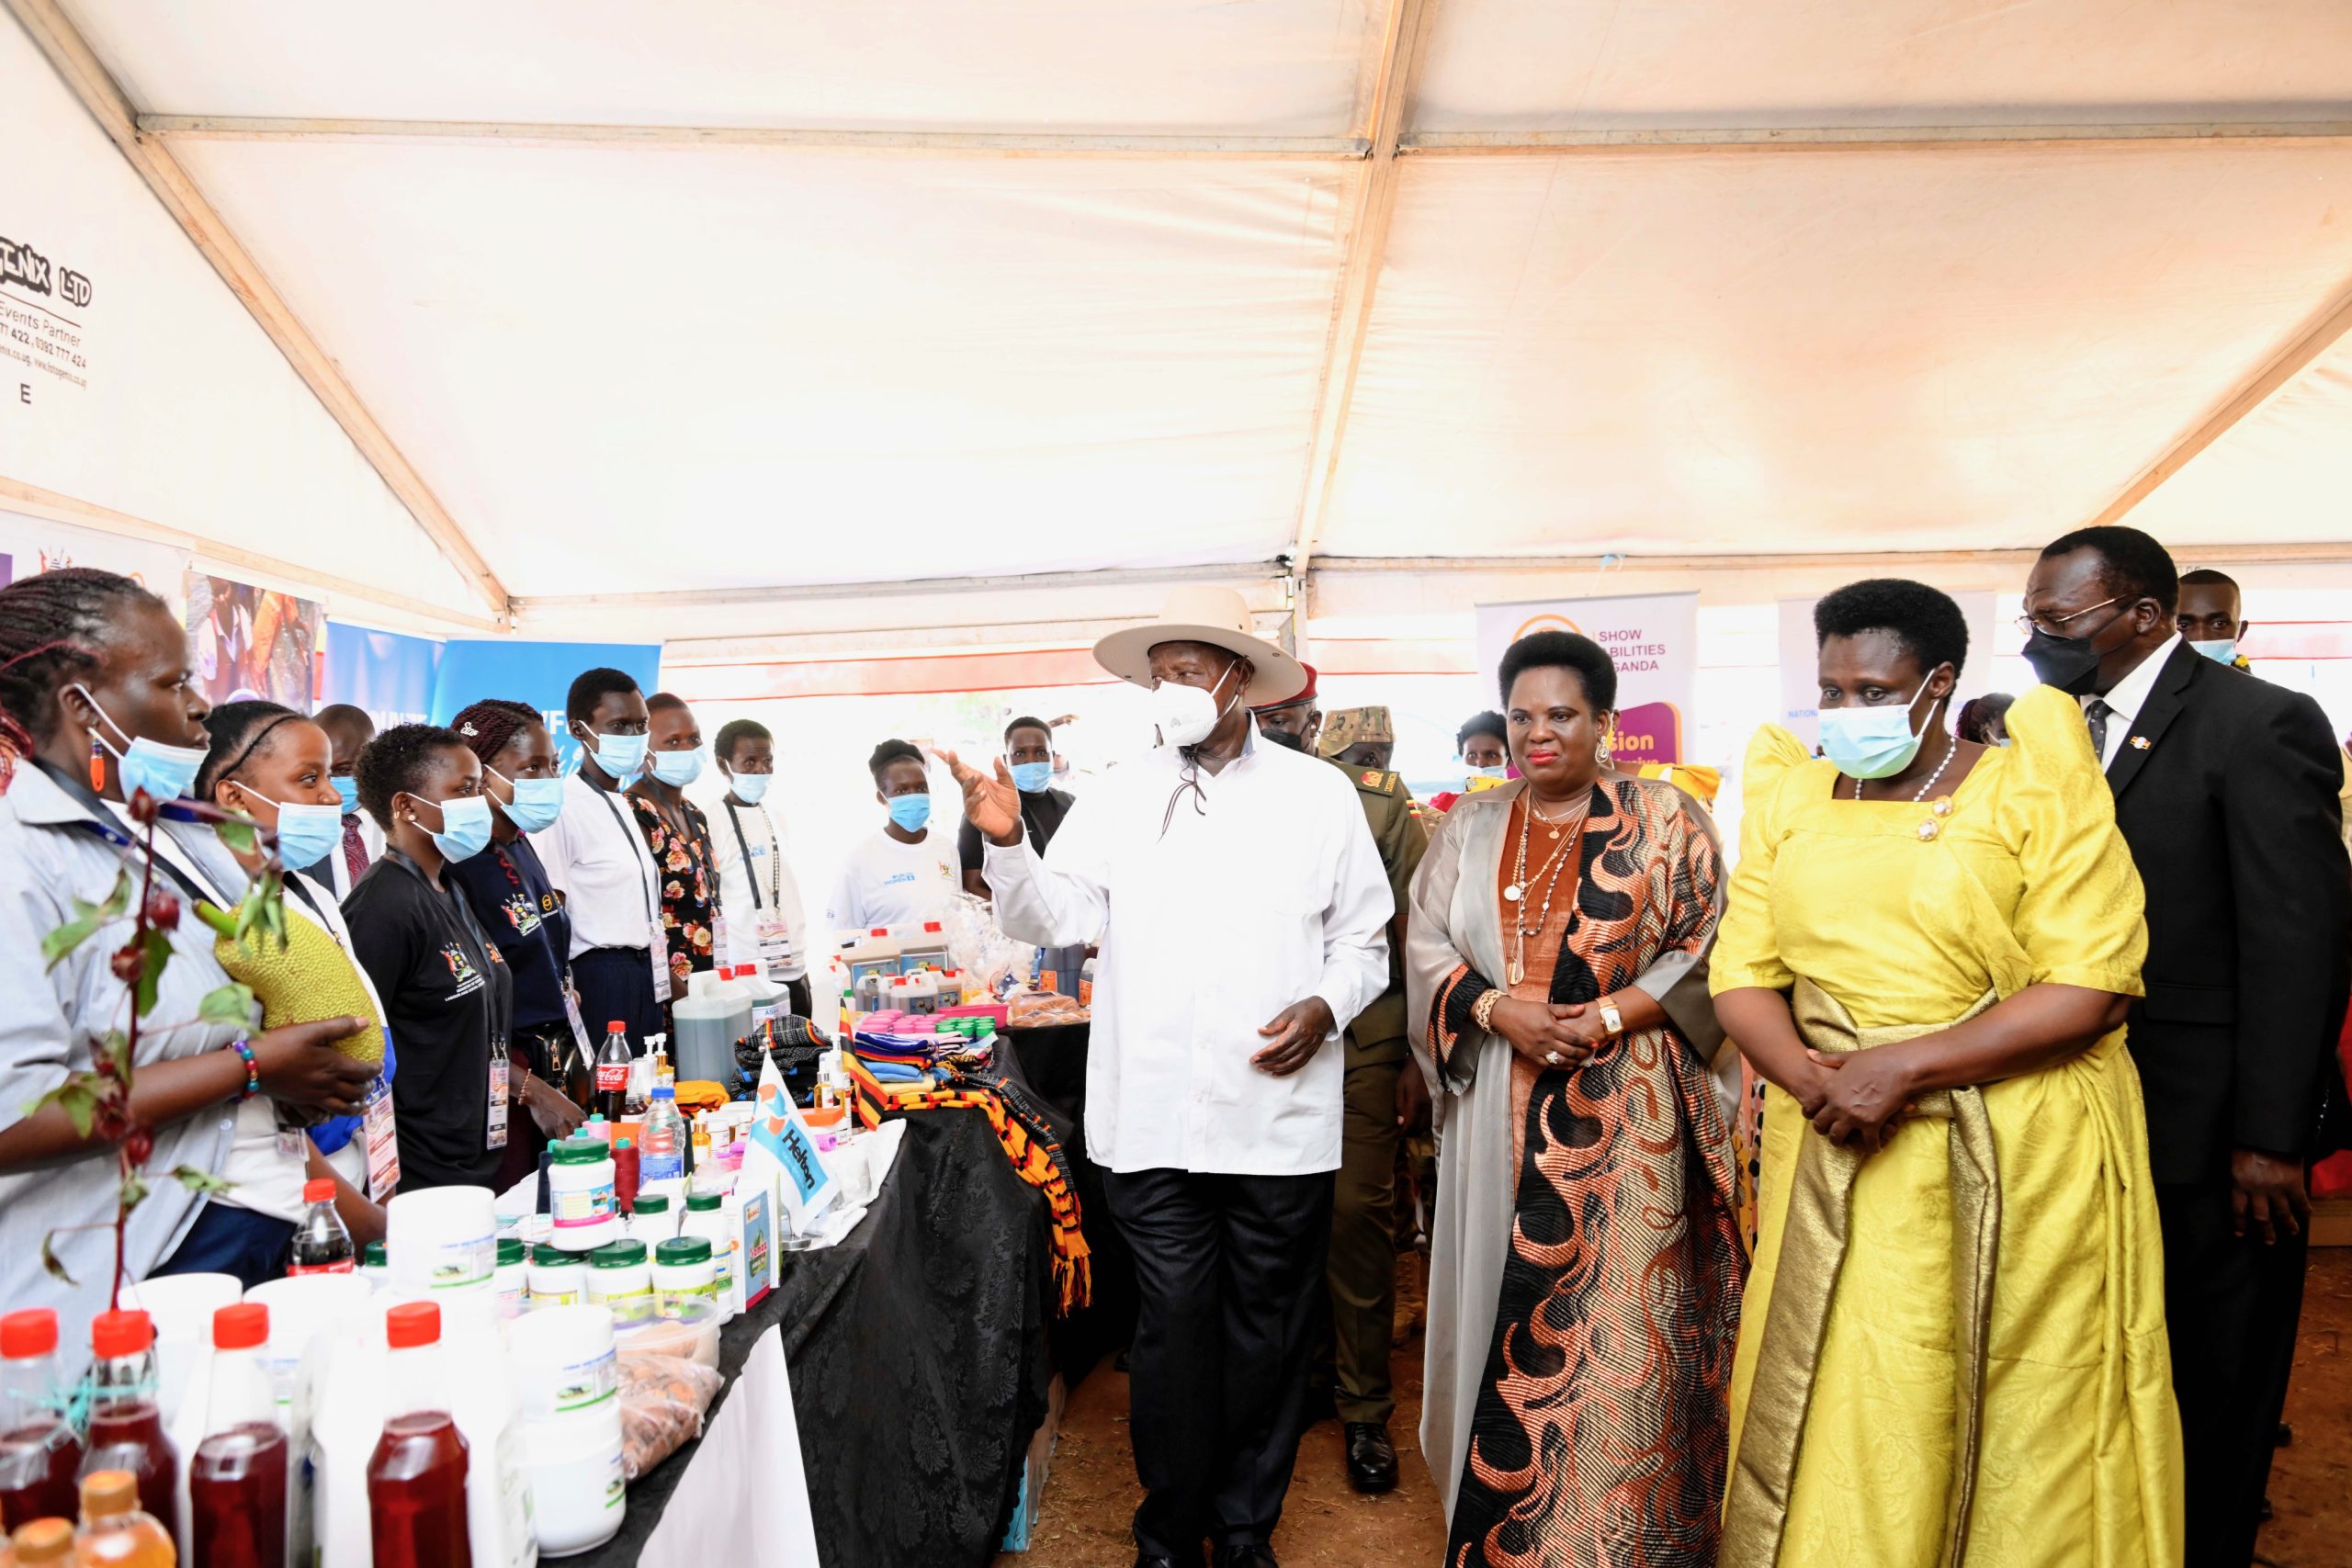 President Museveni Advocates for Economic Empowerment to Address Women's Challenges